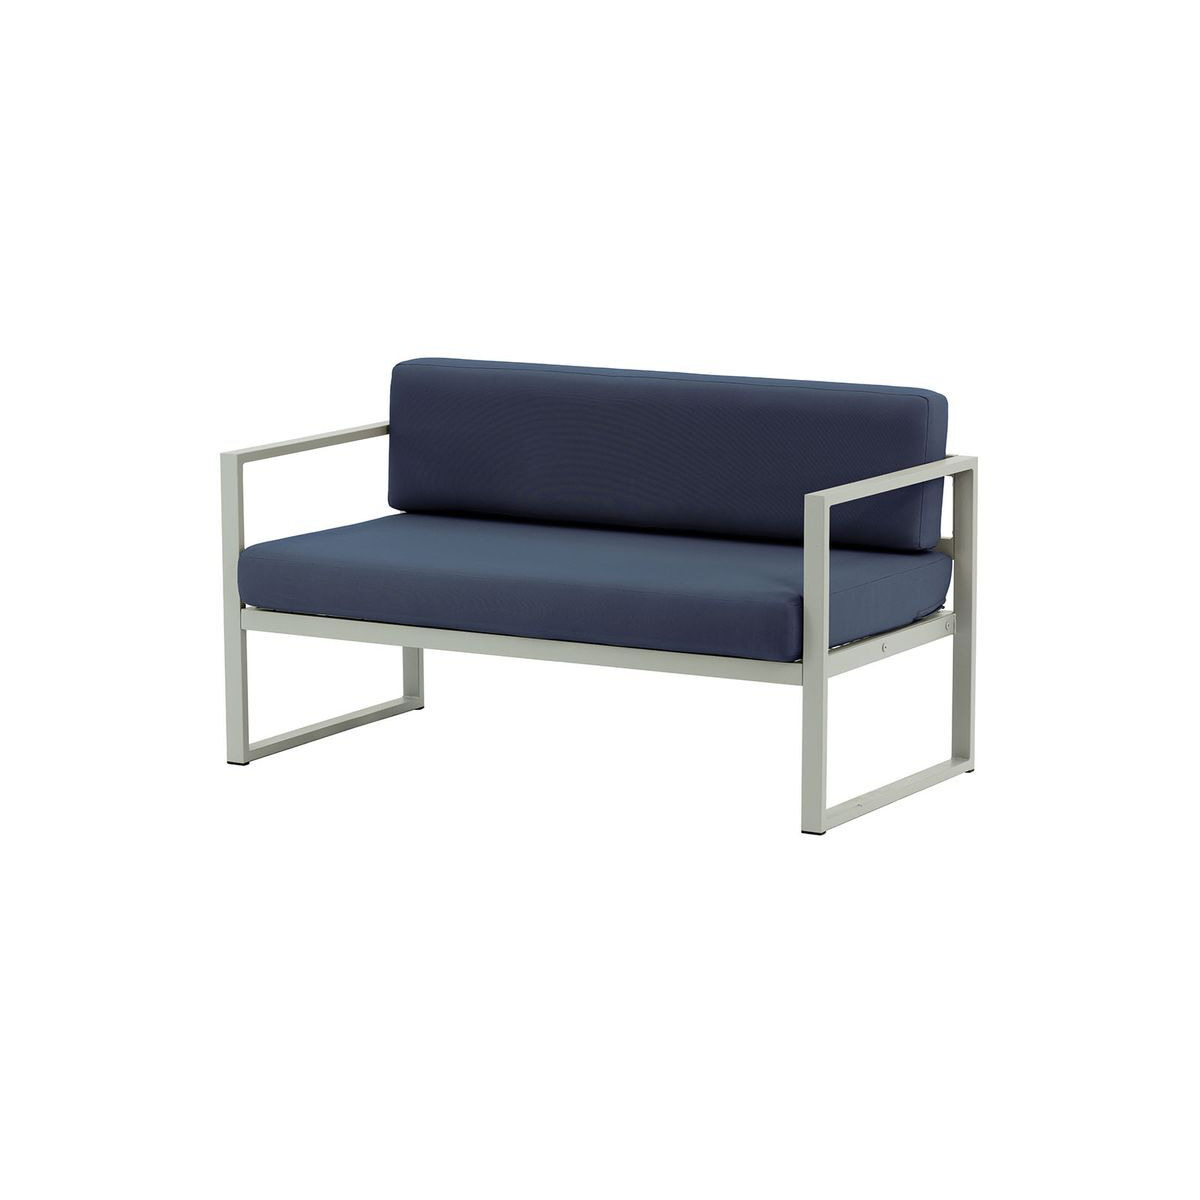 Sunset Garden 2 Seater Sofa, navy blue, Leg colour: grey steel - image 1